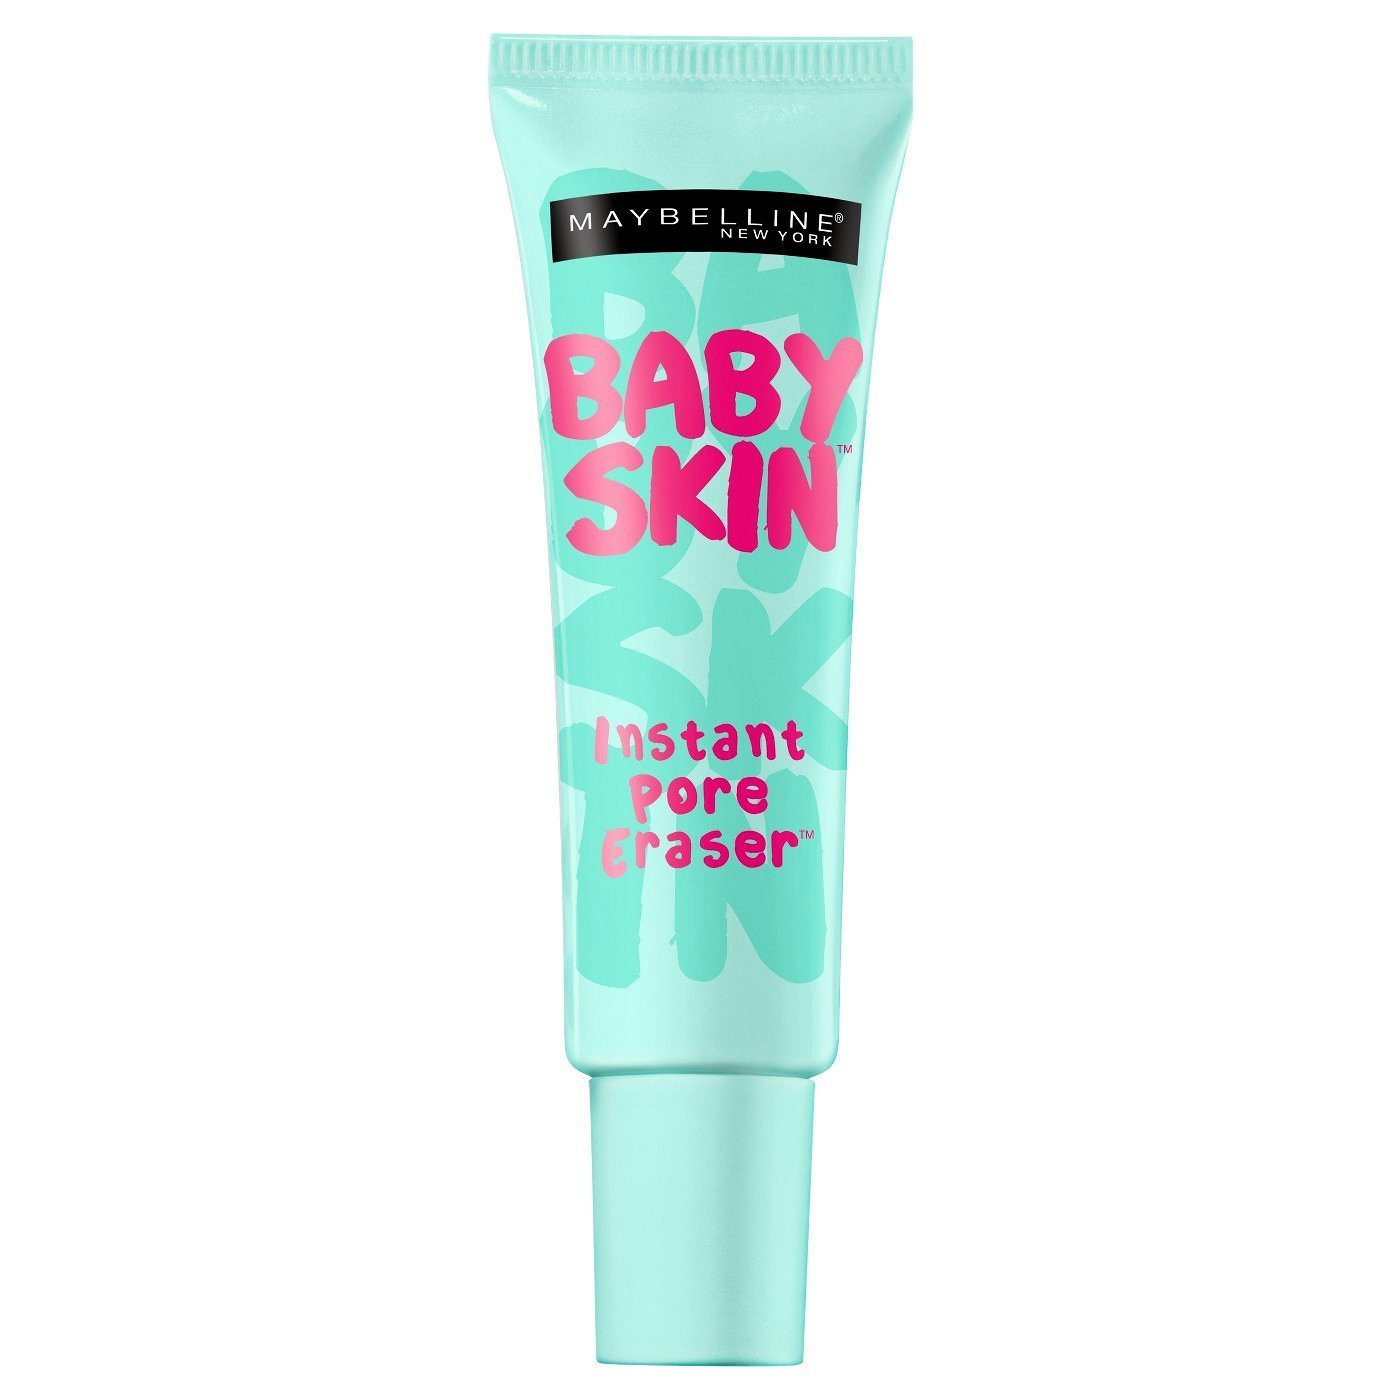 Maybelline NewYork Baby Skin Instant Pore Eraser